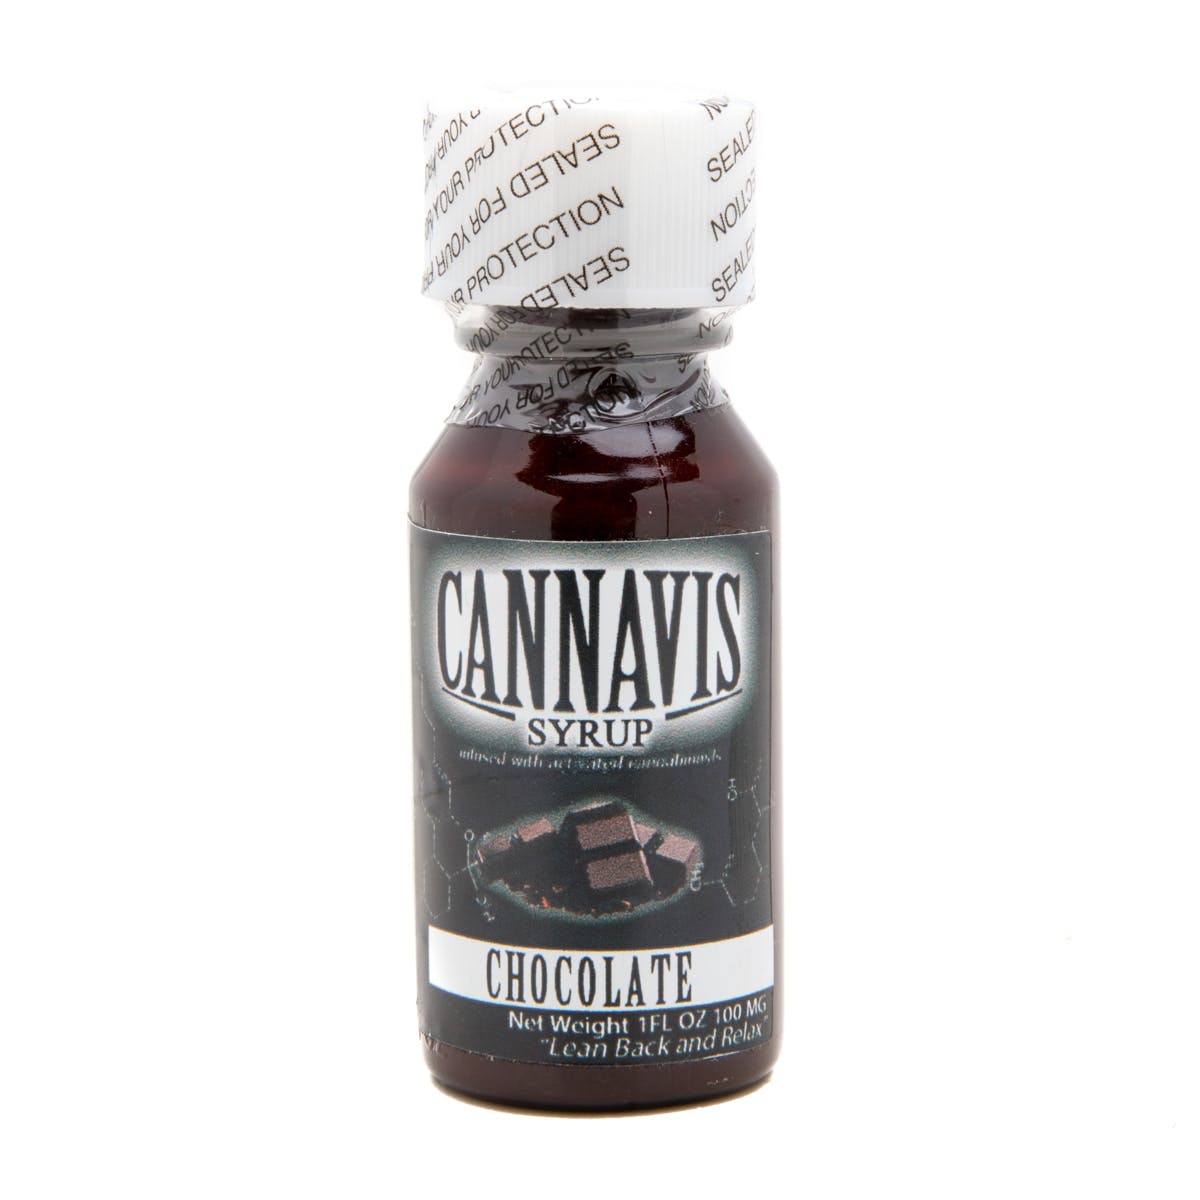 marijuana-dispensaries-west-coast-collective-in-los-angeles-cannavis-syrup-2c-chocolate-100mg